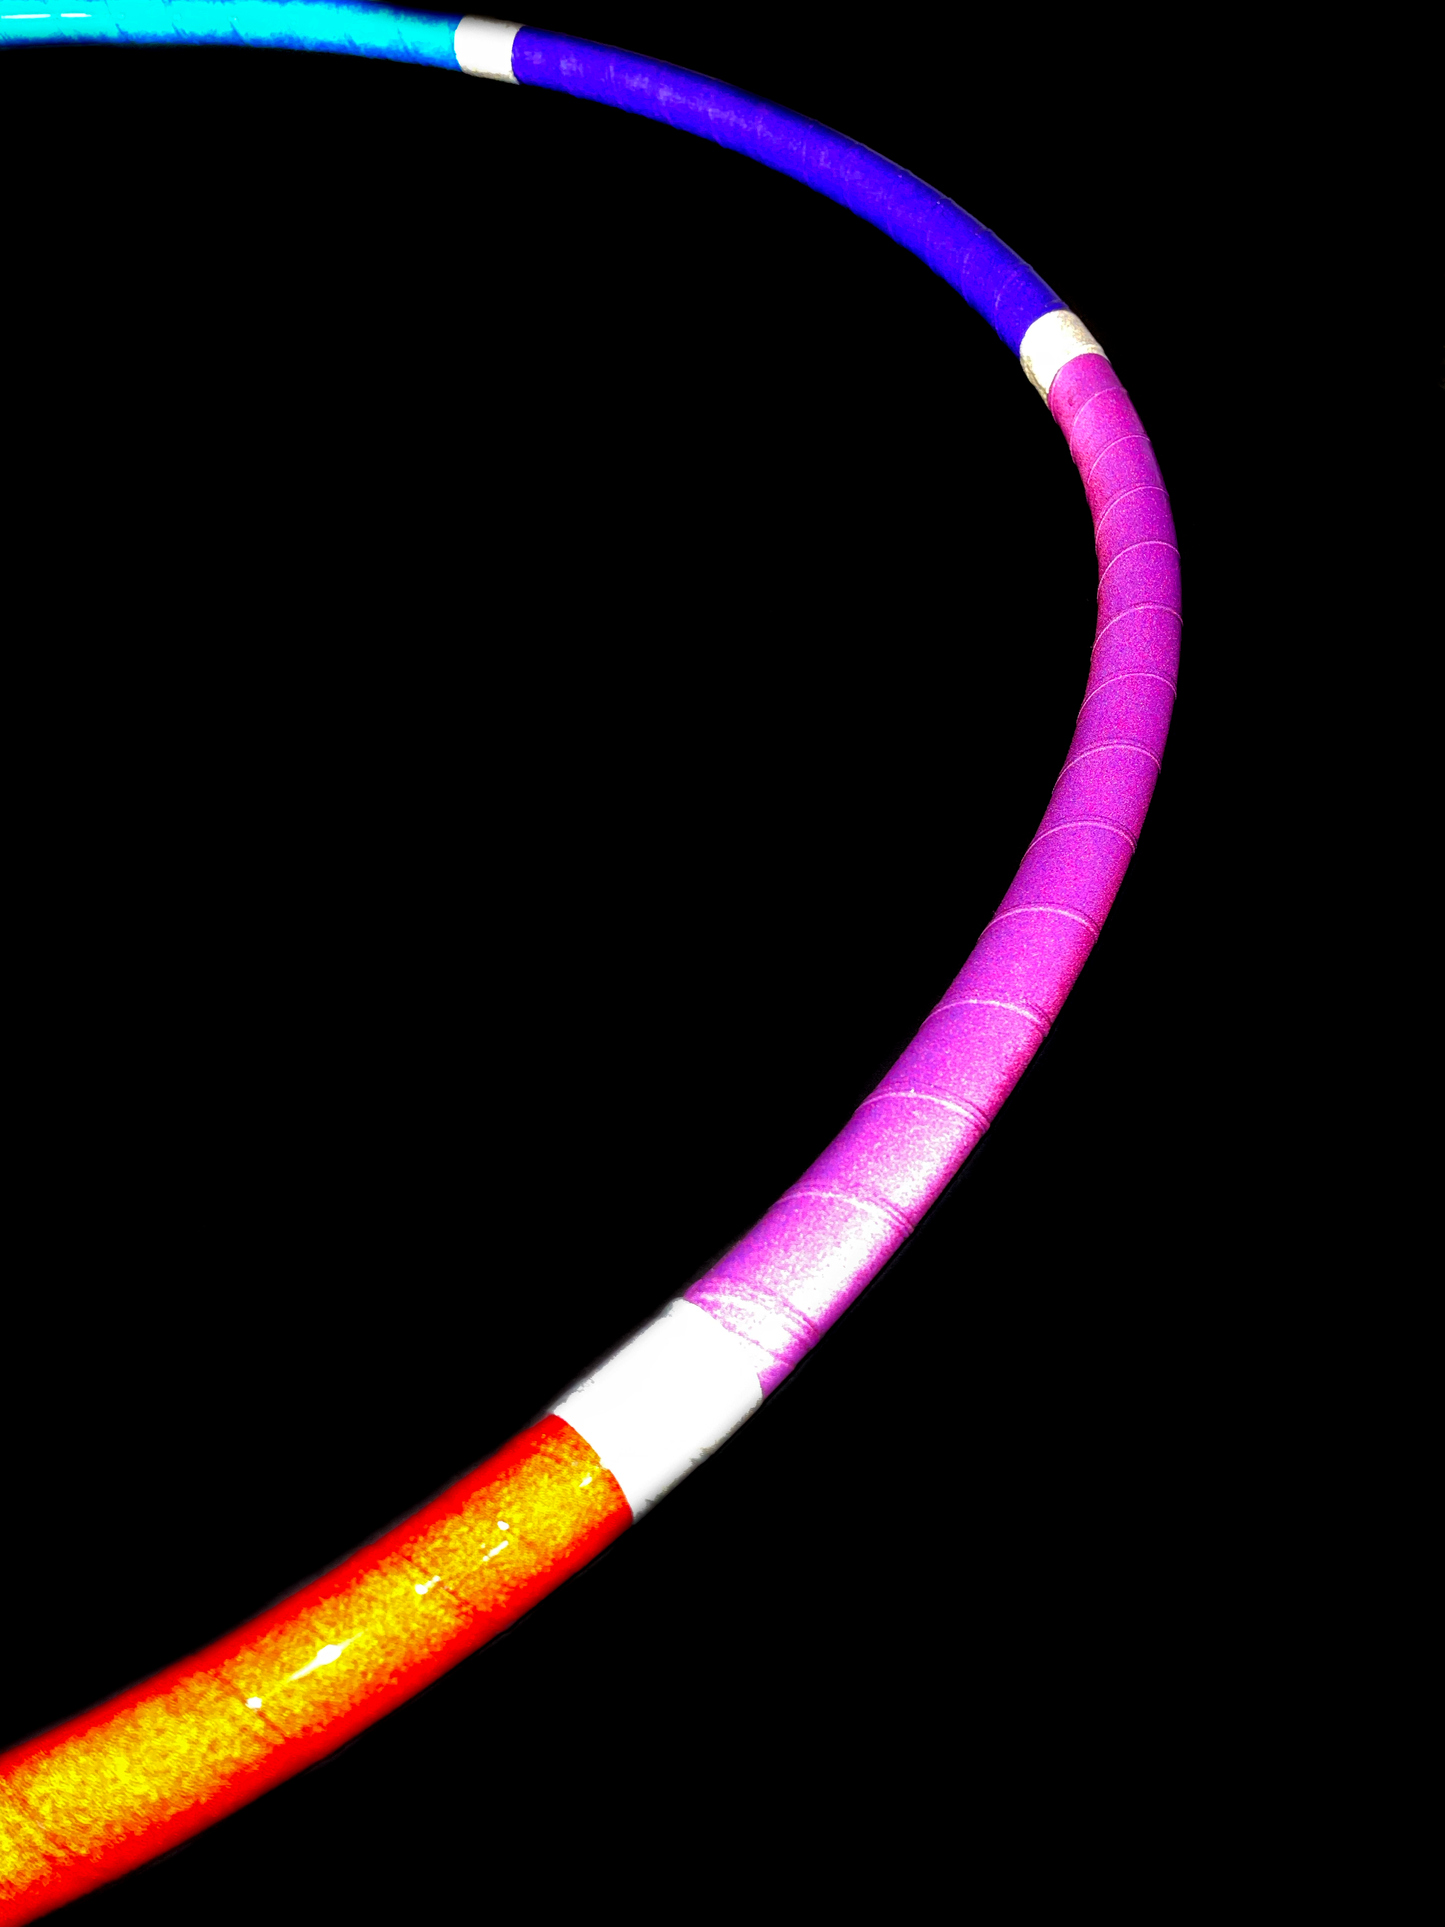 Rainbow Melt Reflective Rainbow Taped Hoops